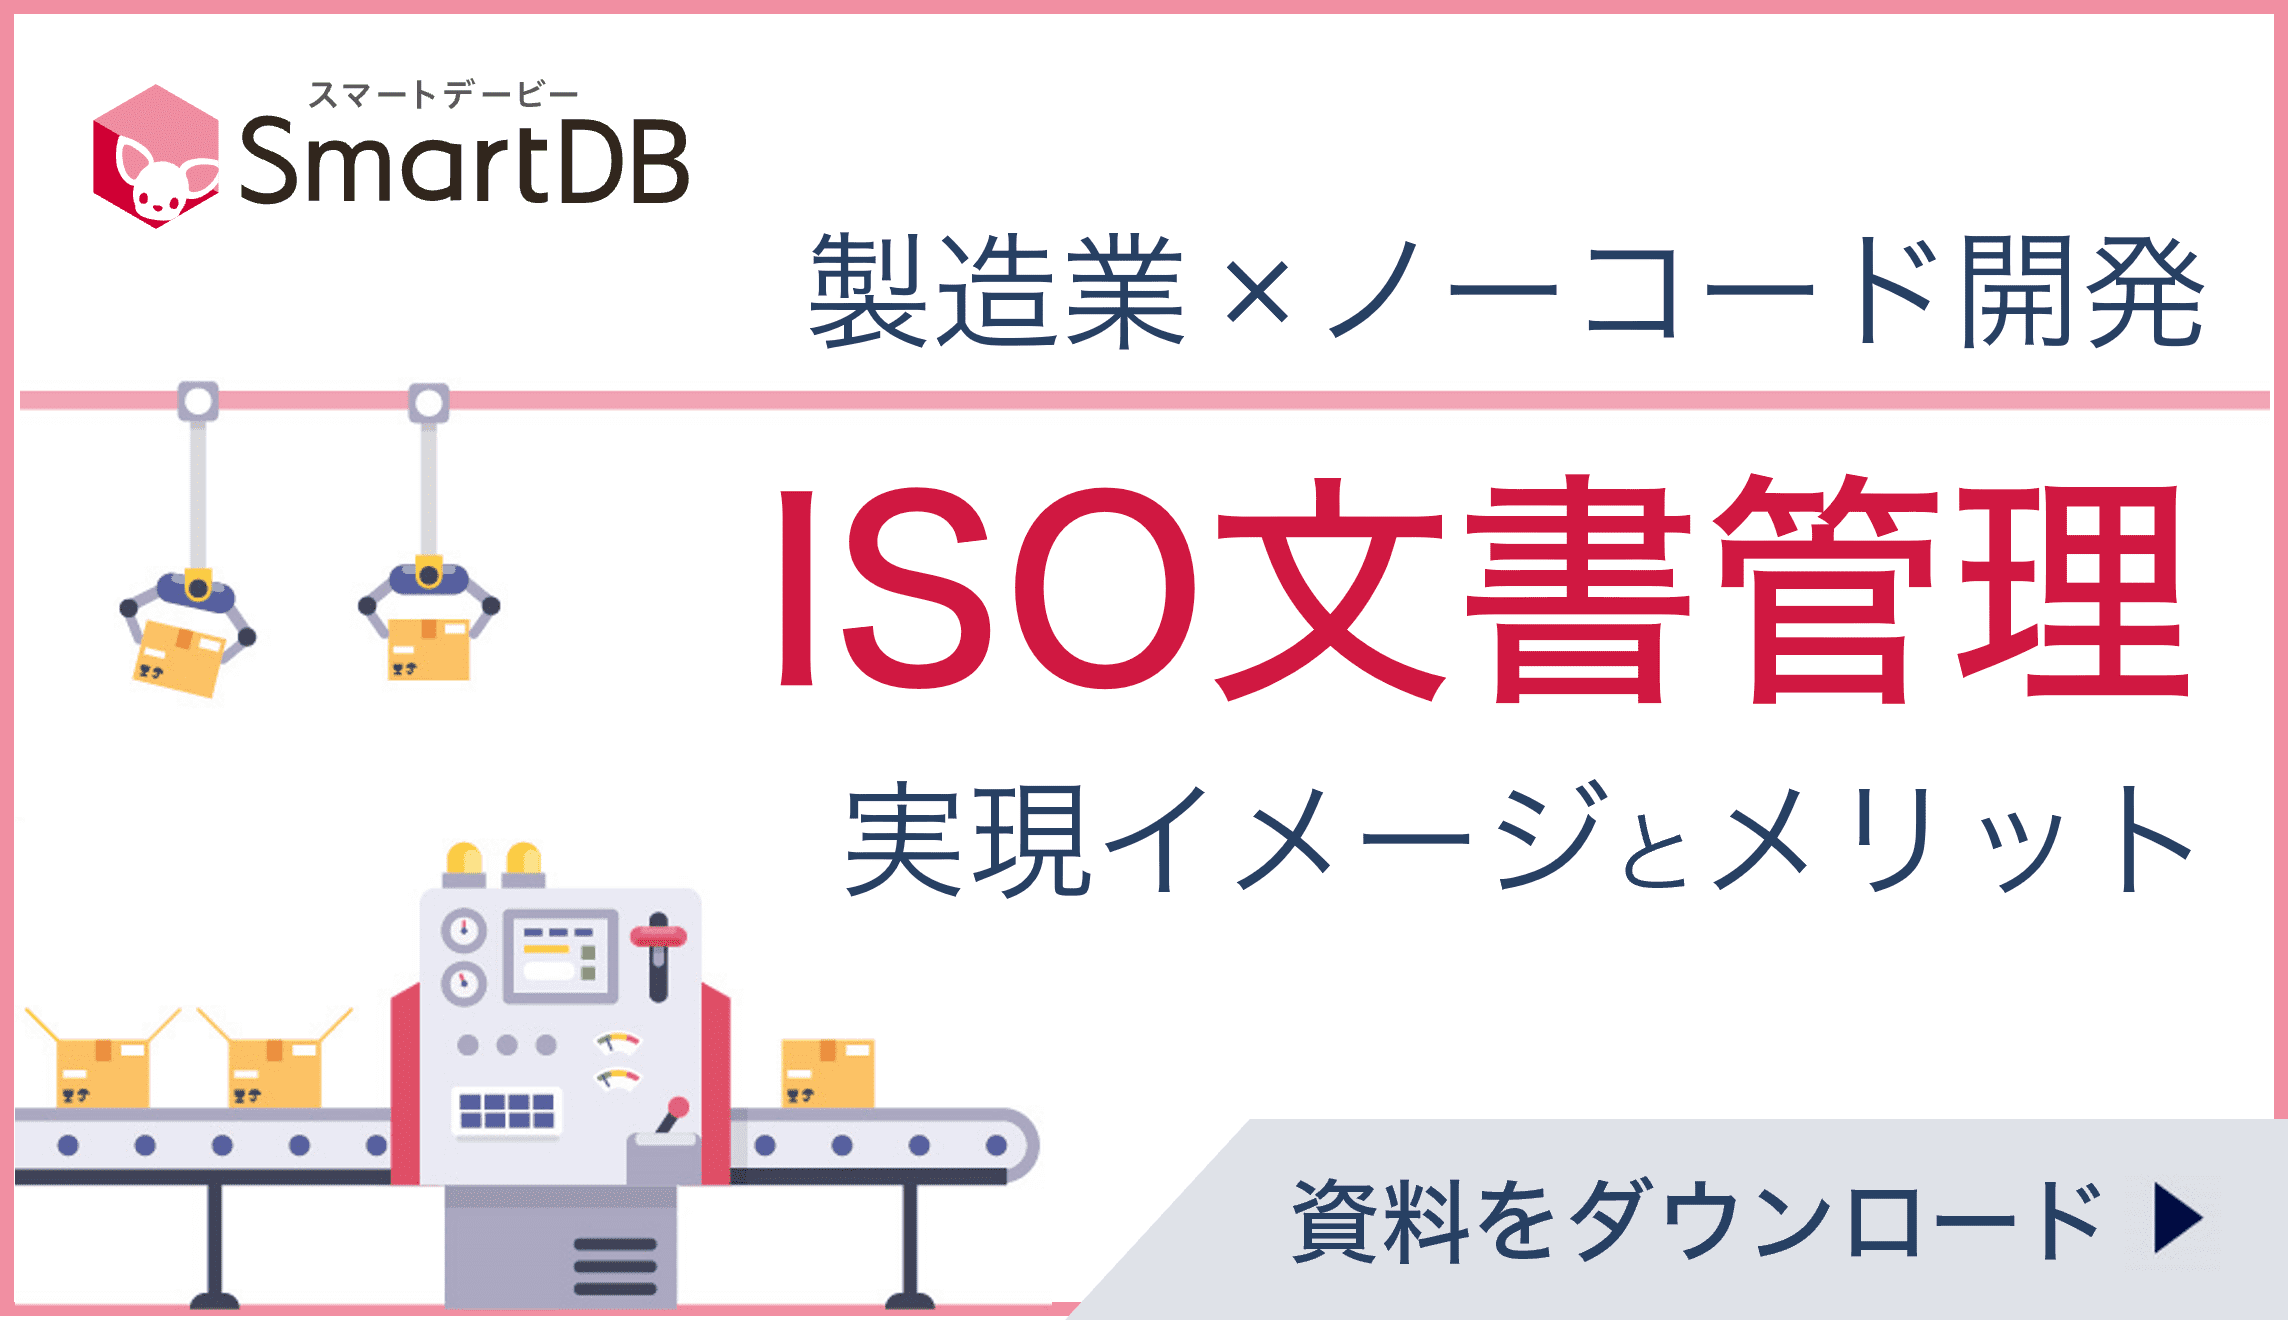 DXの第一歩！製造業×ノーコード開発 - 業務デジタル化 事例集 -